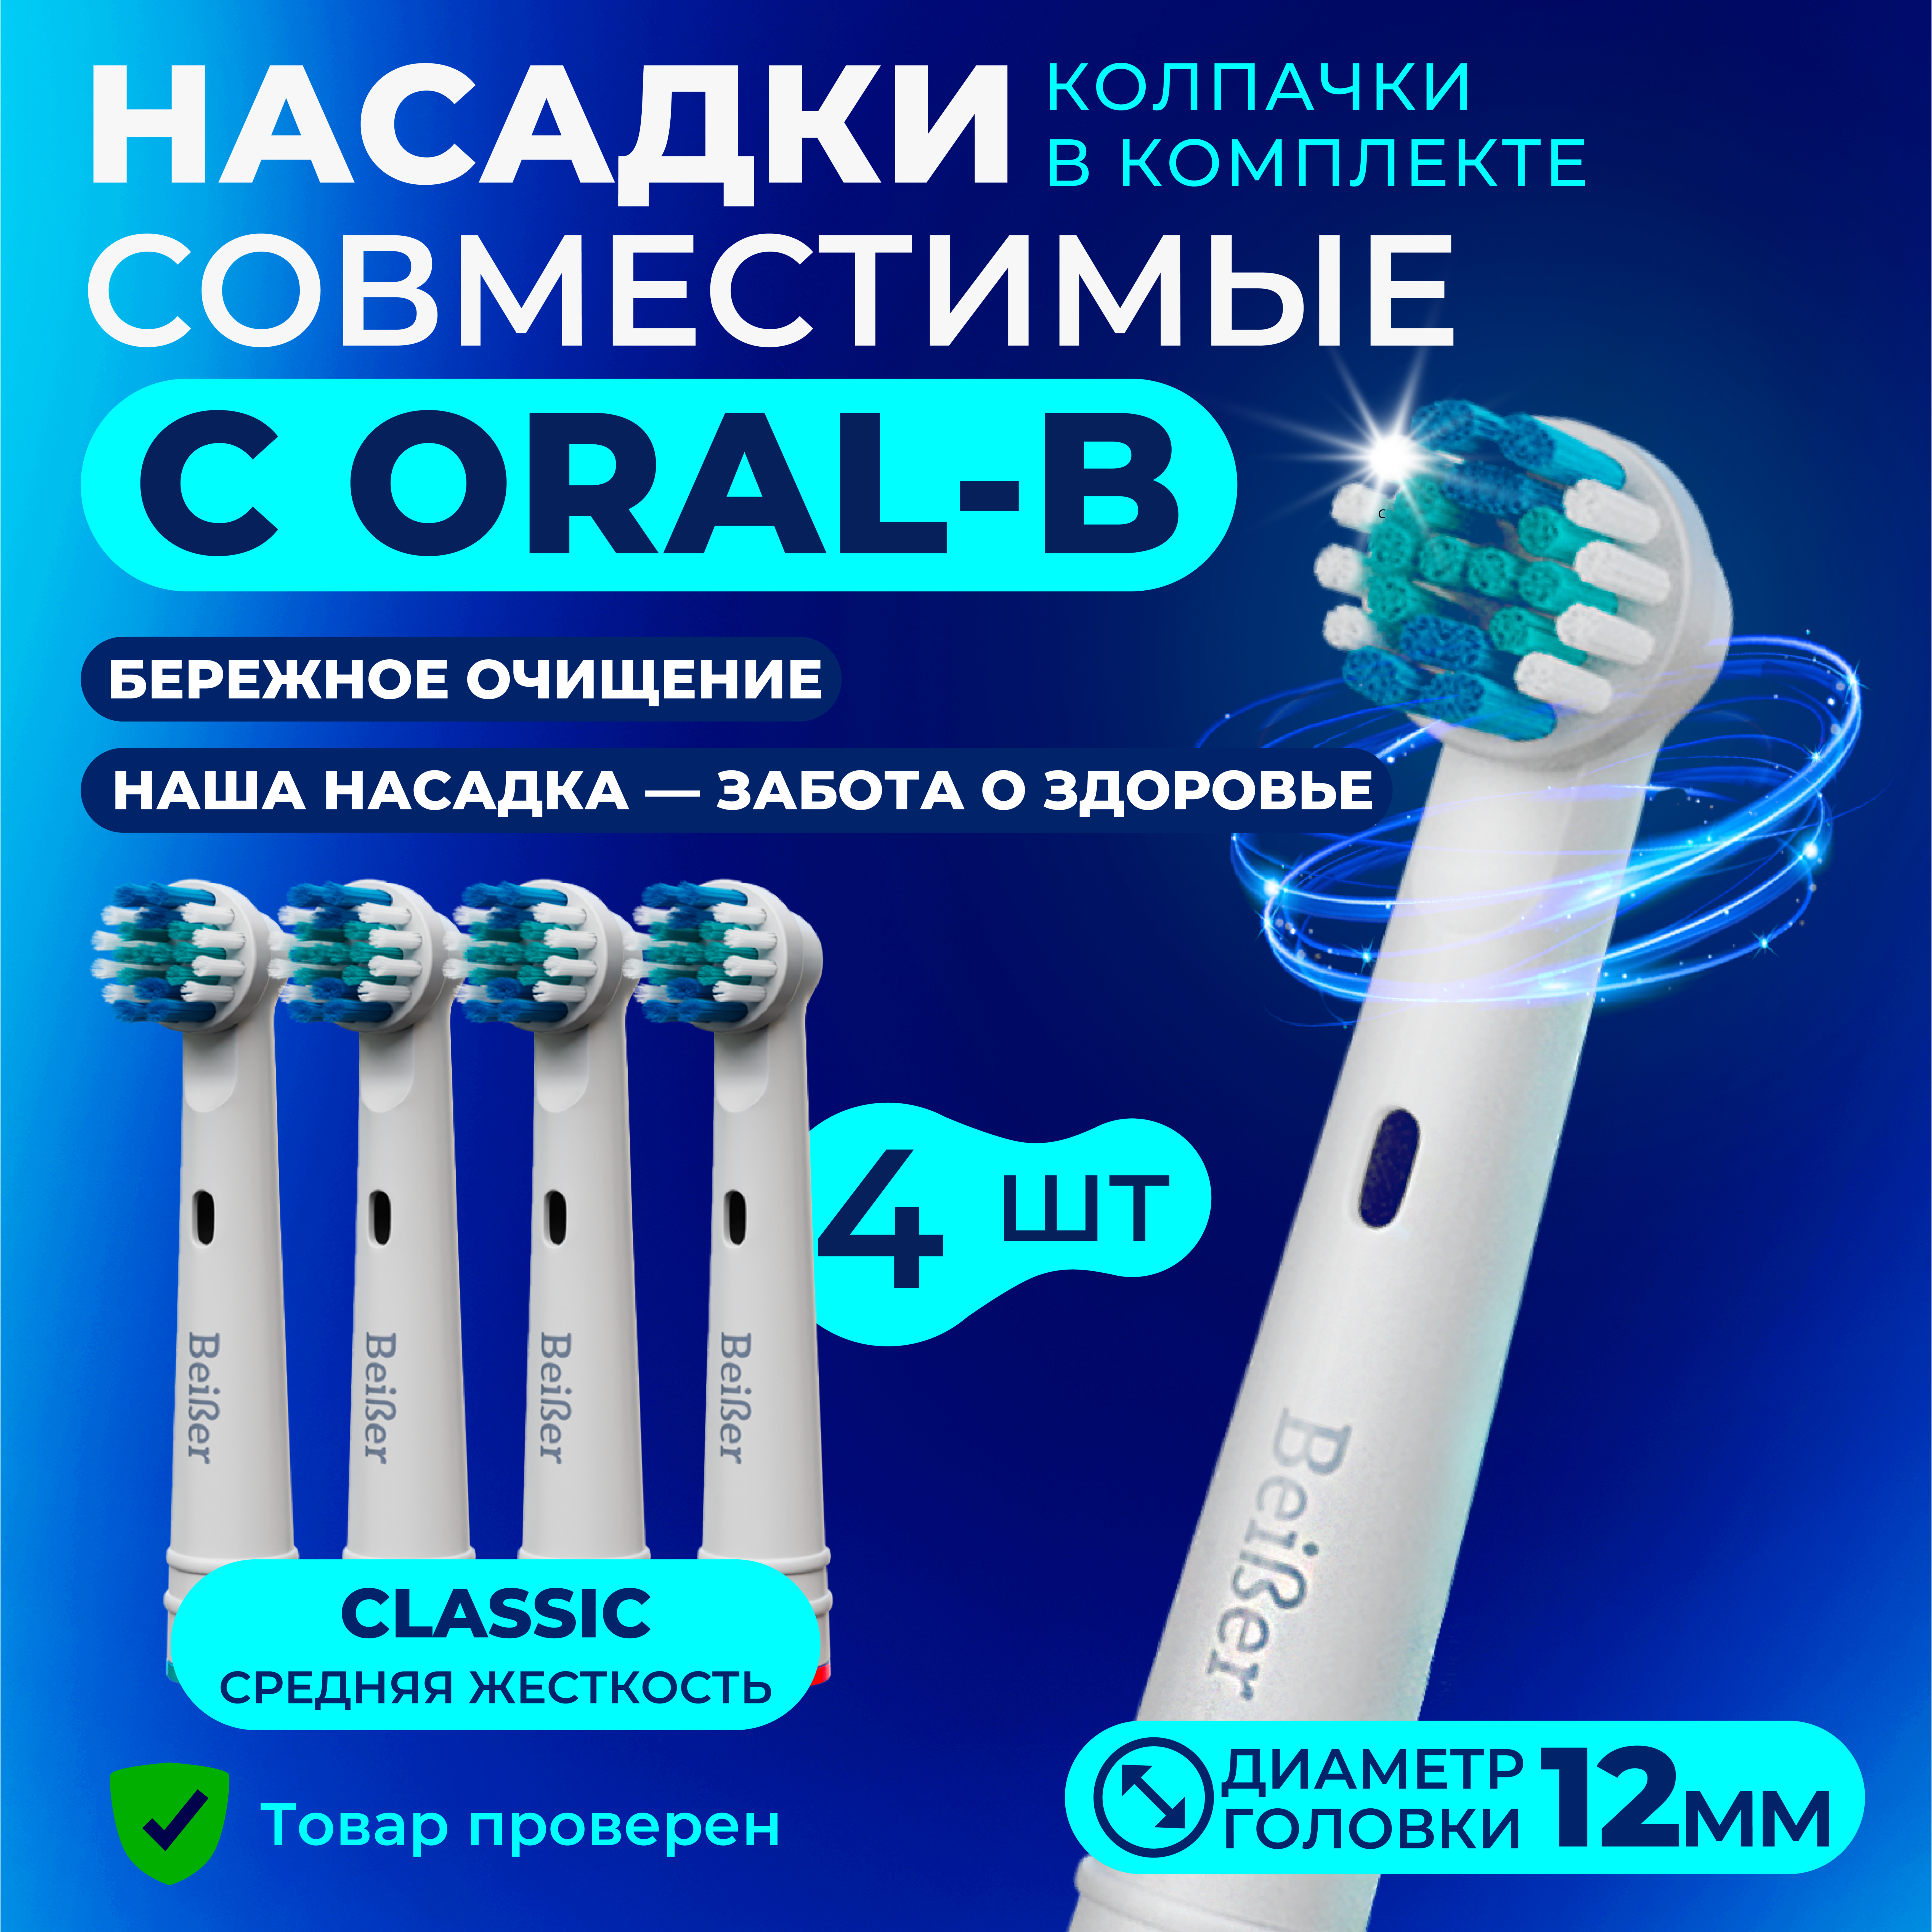 Насадка на зубную щетку BEIBER совместимая с Oral-b classic 4 шт - фото 1